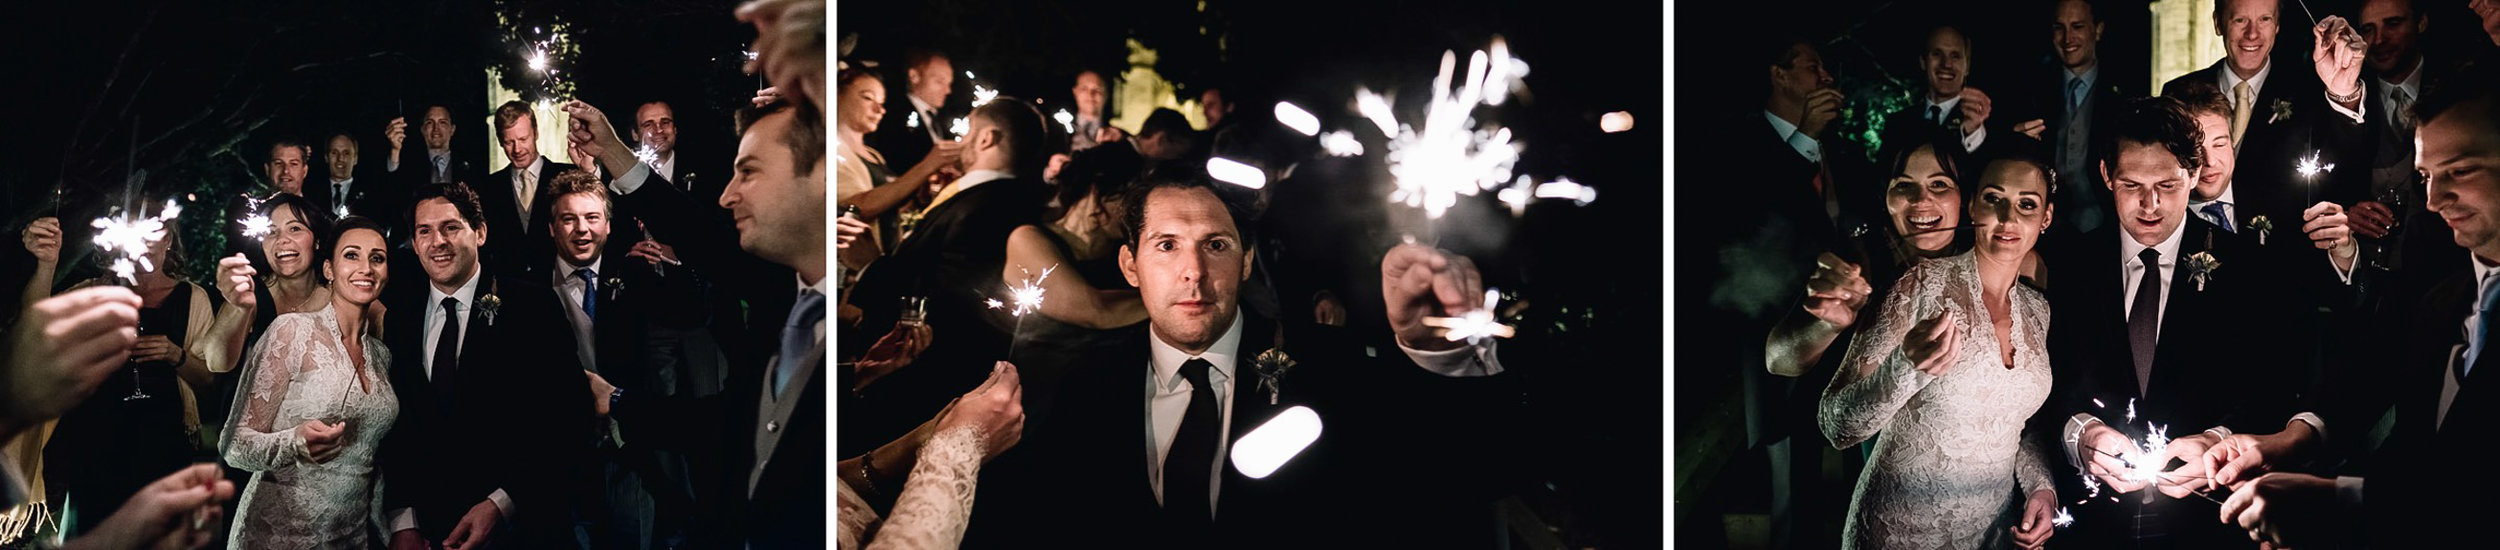  wedding party enjoy winter sparklers 